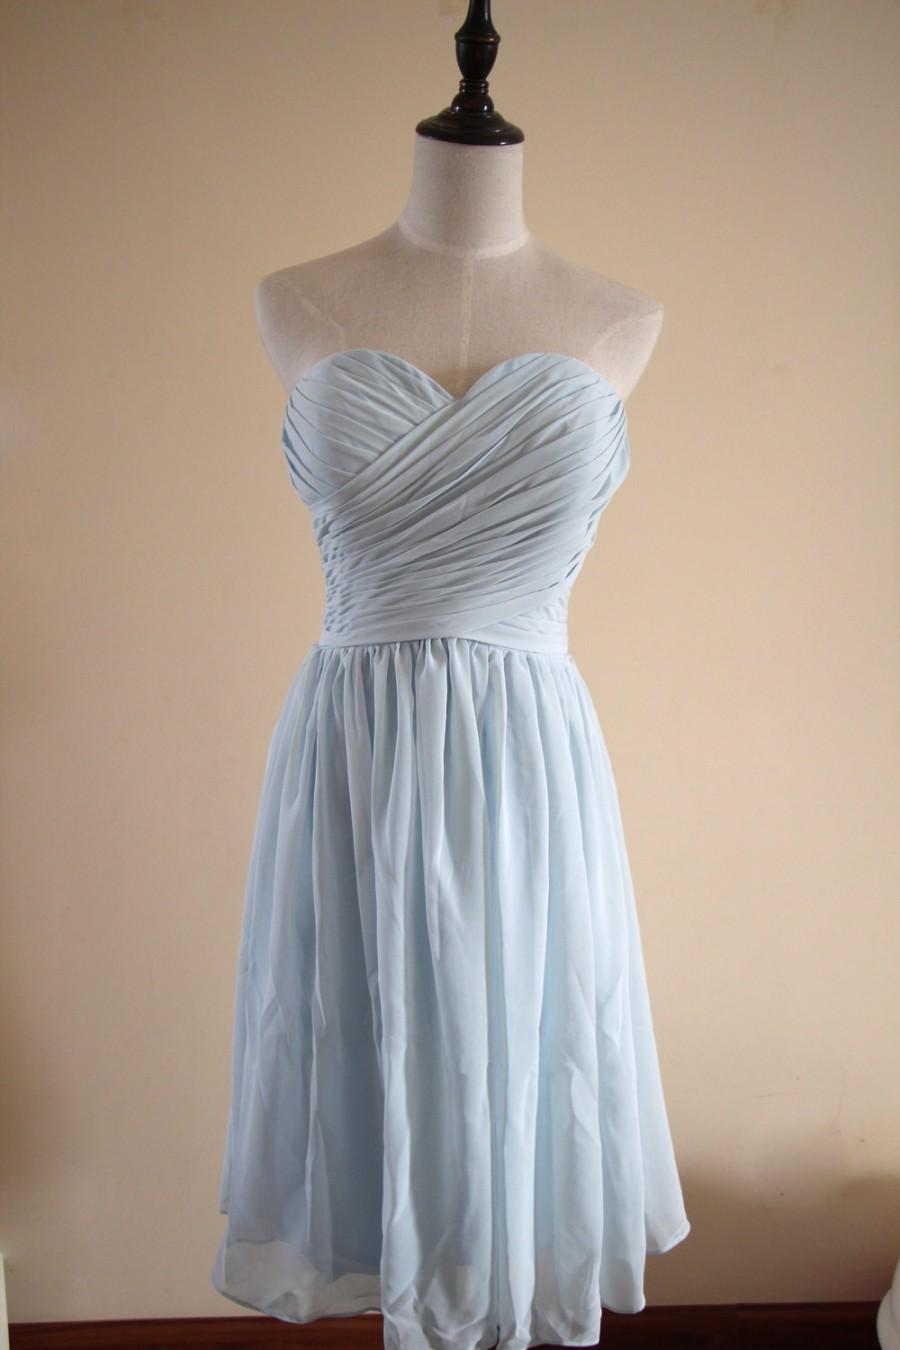 riverside blue bridesmaid dresses